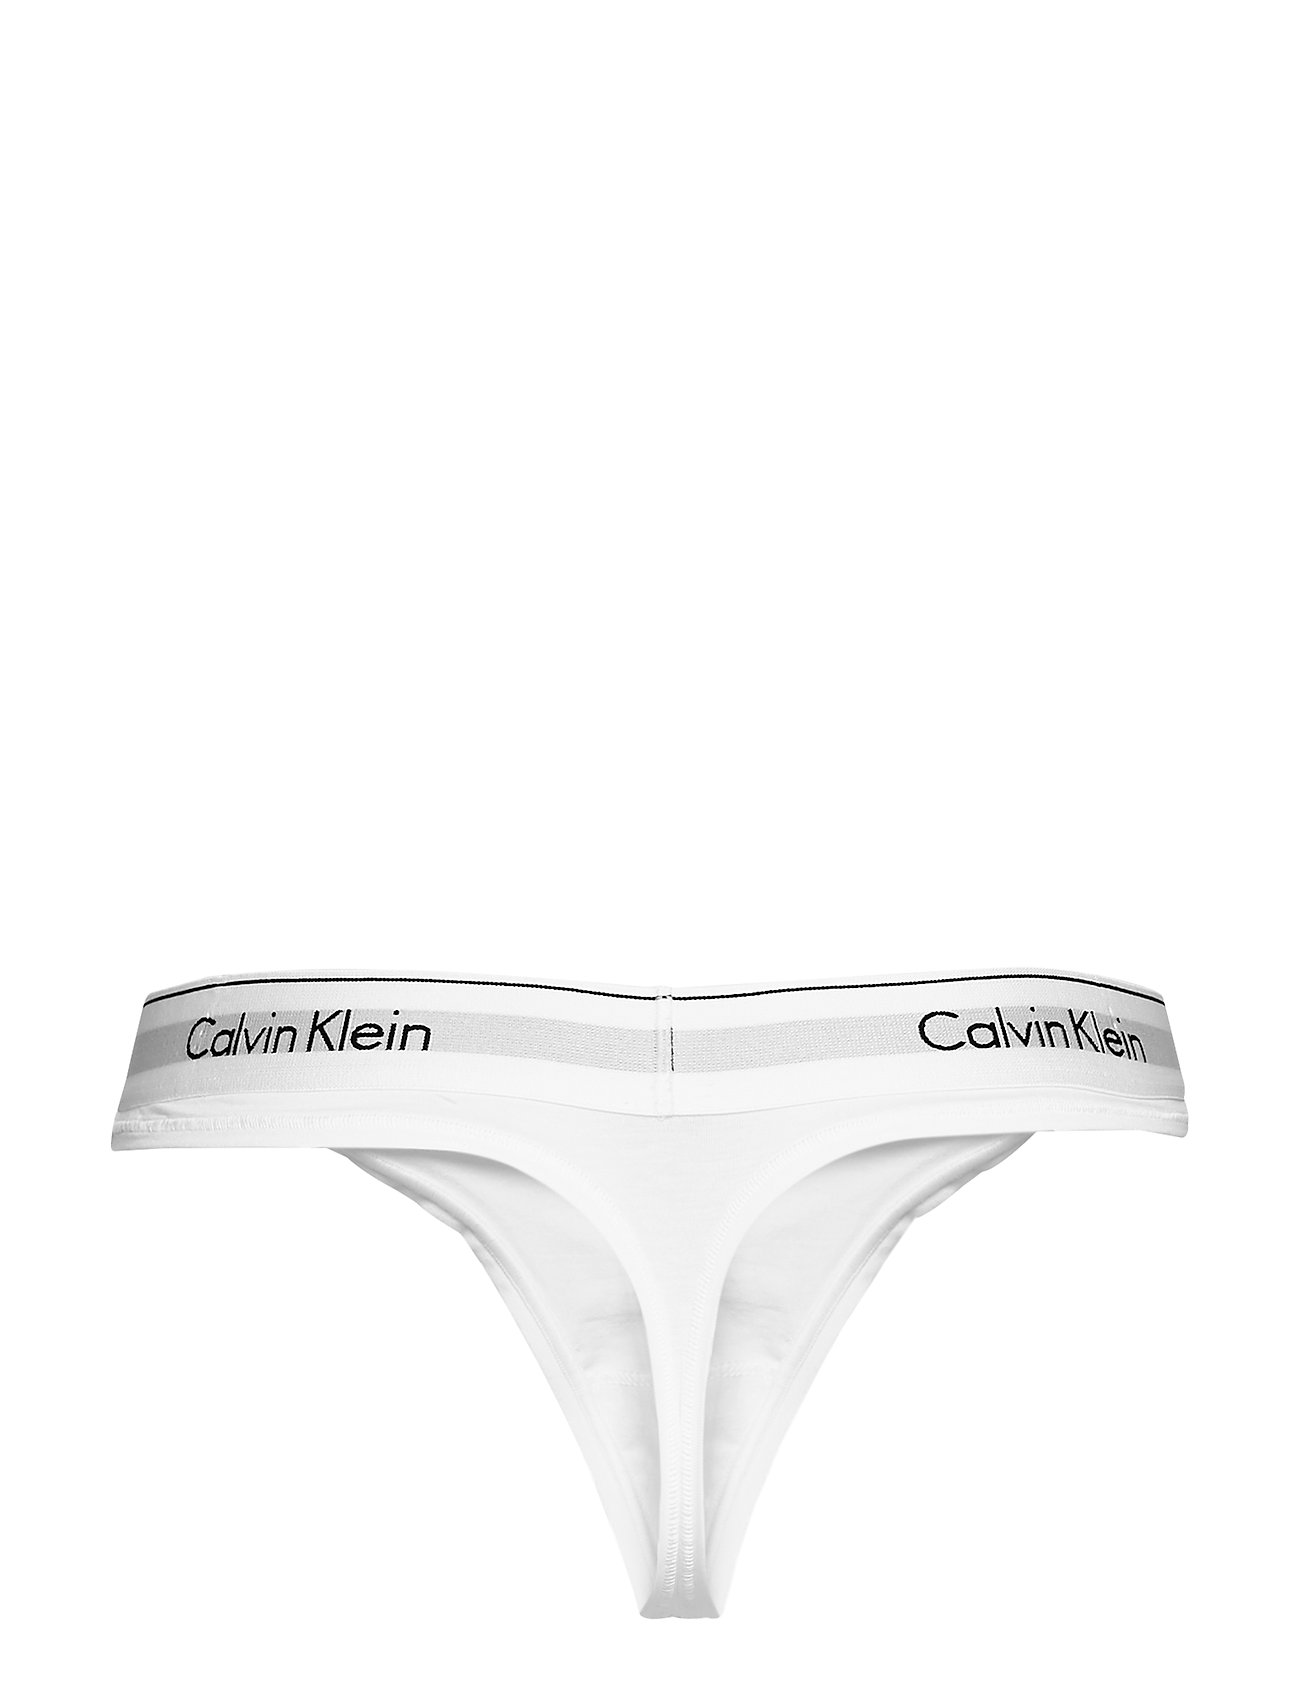 Thong G-streng Undertøj Hvid Klein g-strenge fra Calvin Klein til i - Pashion.dk